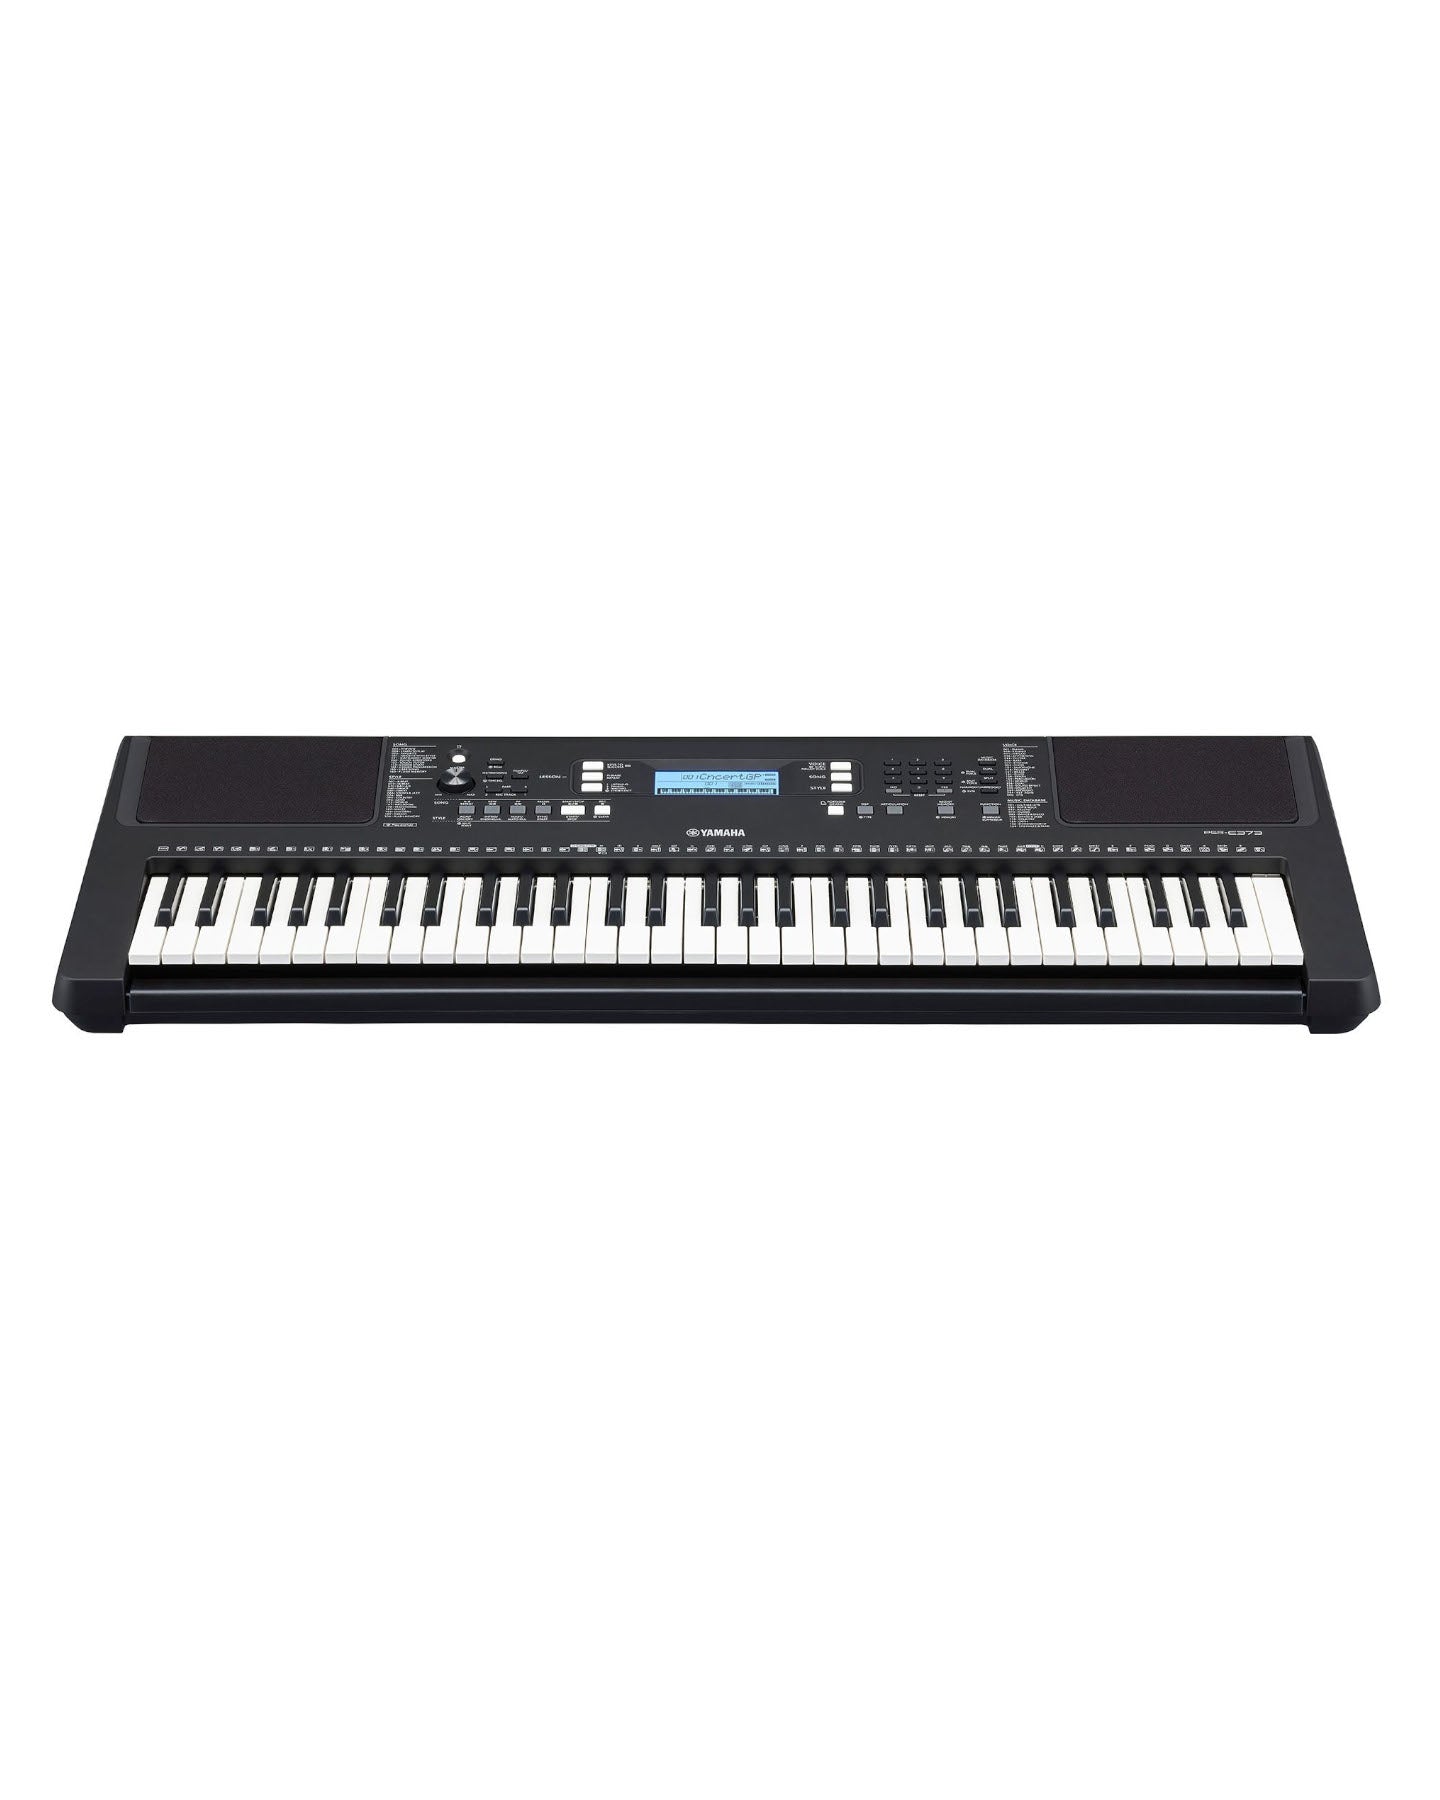 PSR-E373 61-Key Portable Arranger Keyboard